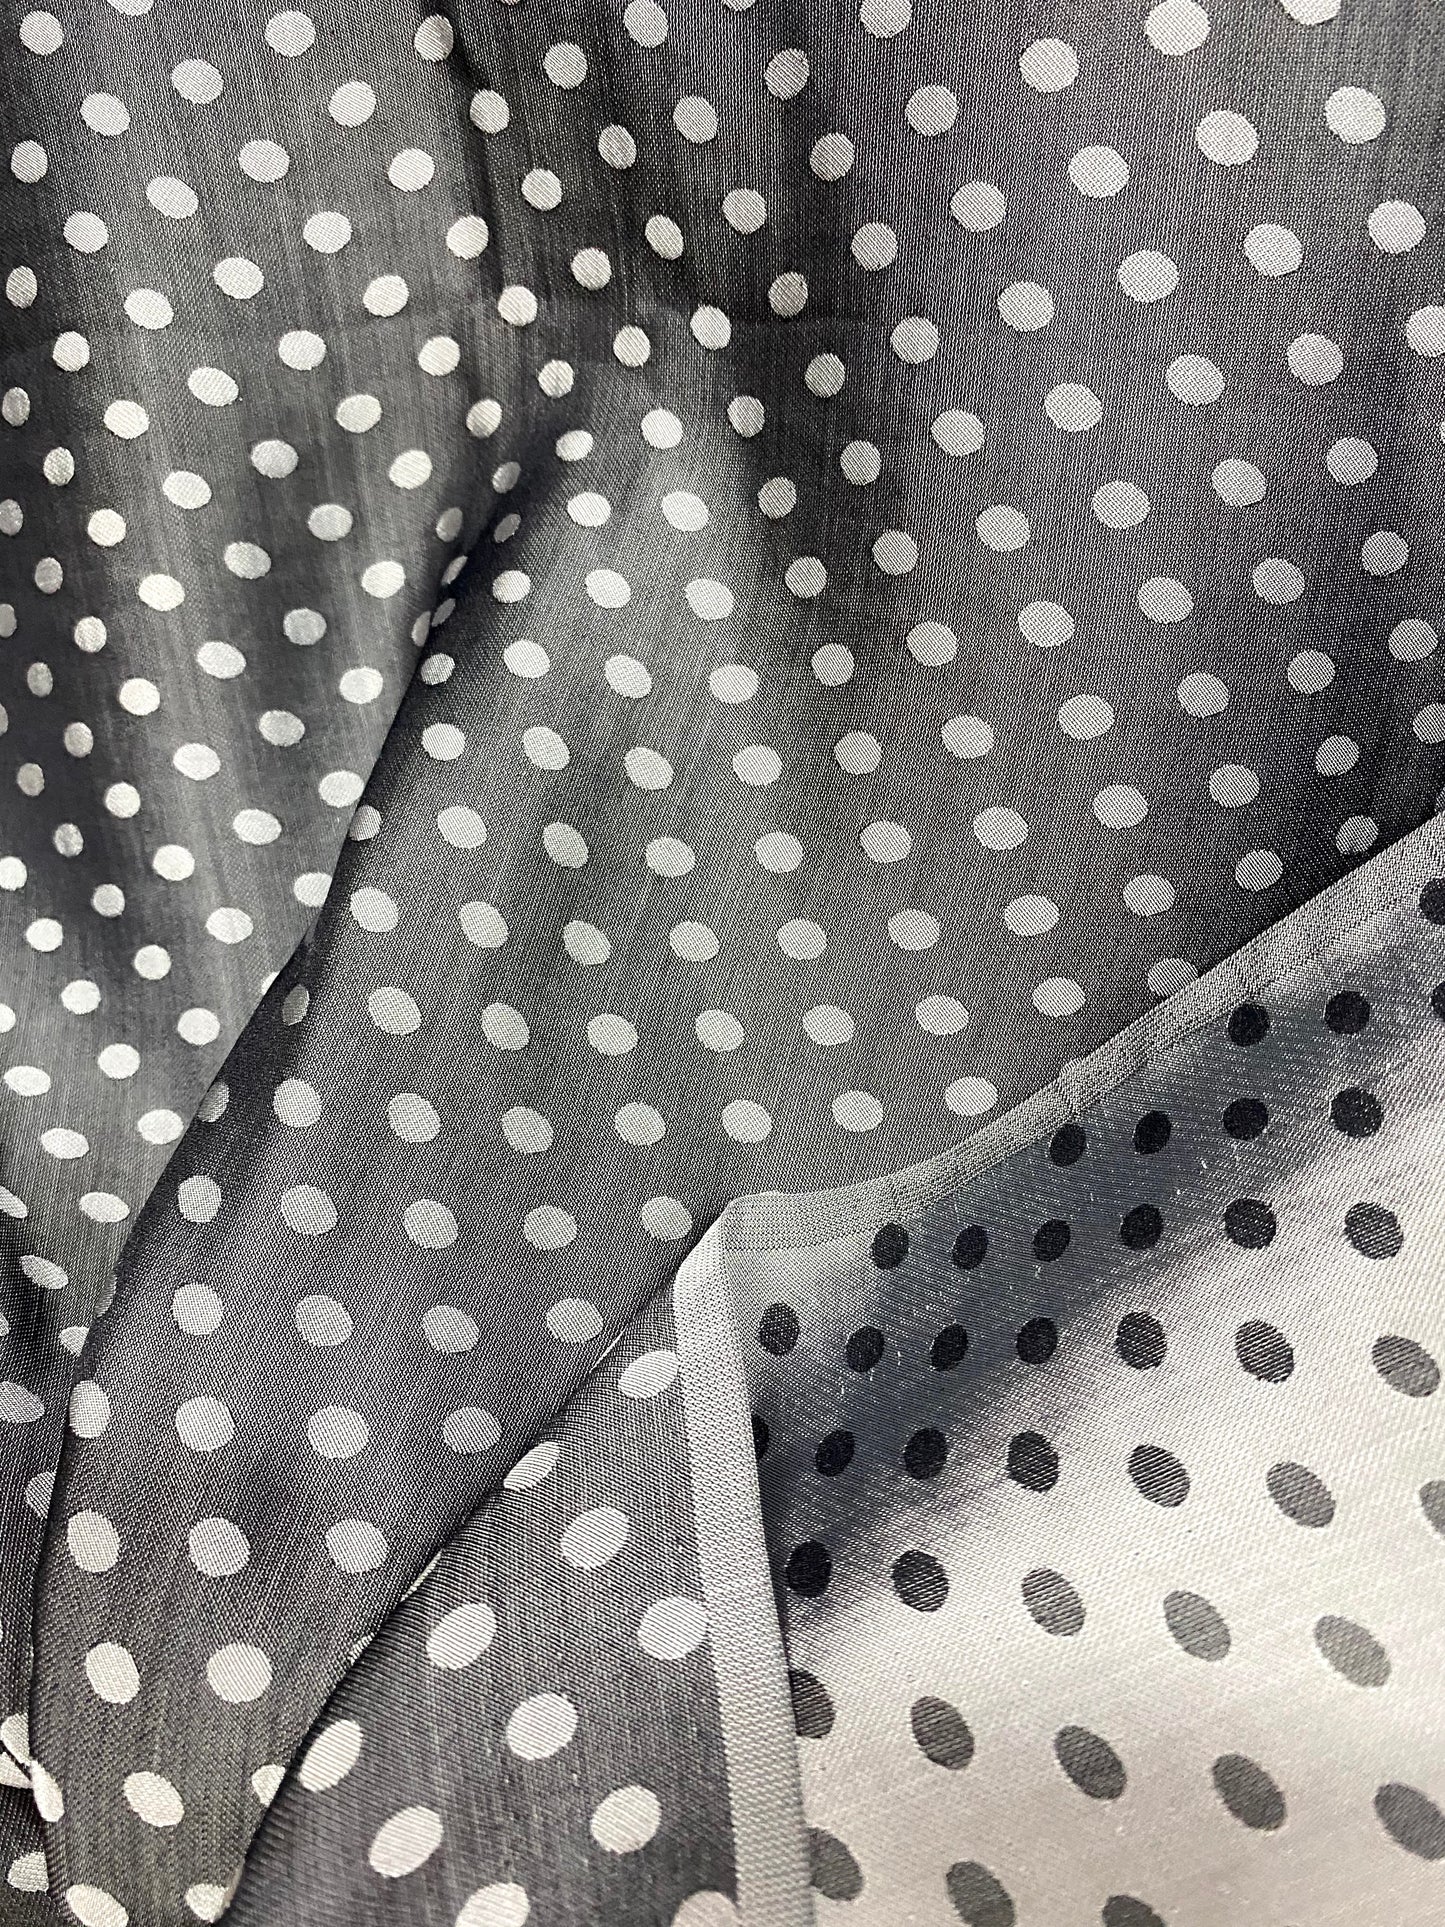 Dark grey dot silk - PURE MULBERRY SILK fabric by the yard - Polkadot silk -Luxury Silk - Natural silk - Handmade in VietNam- Silk with Design